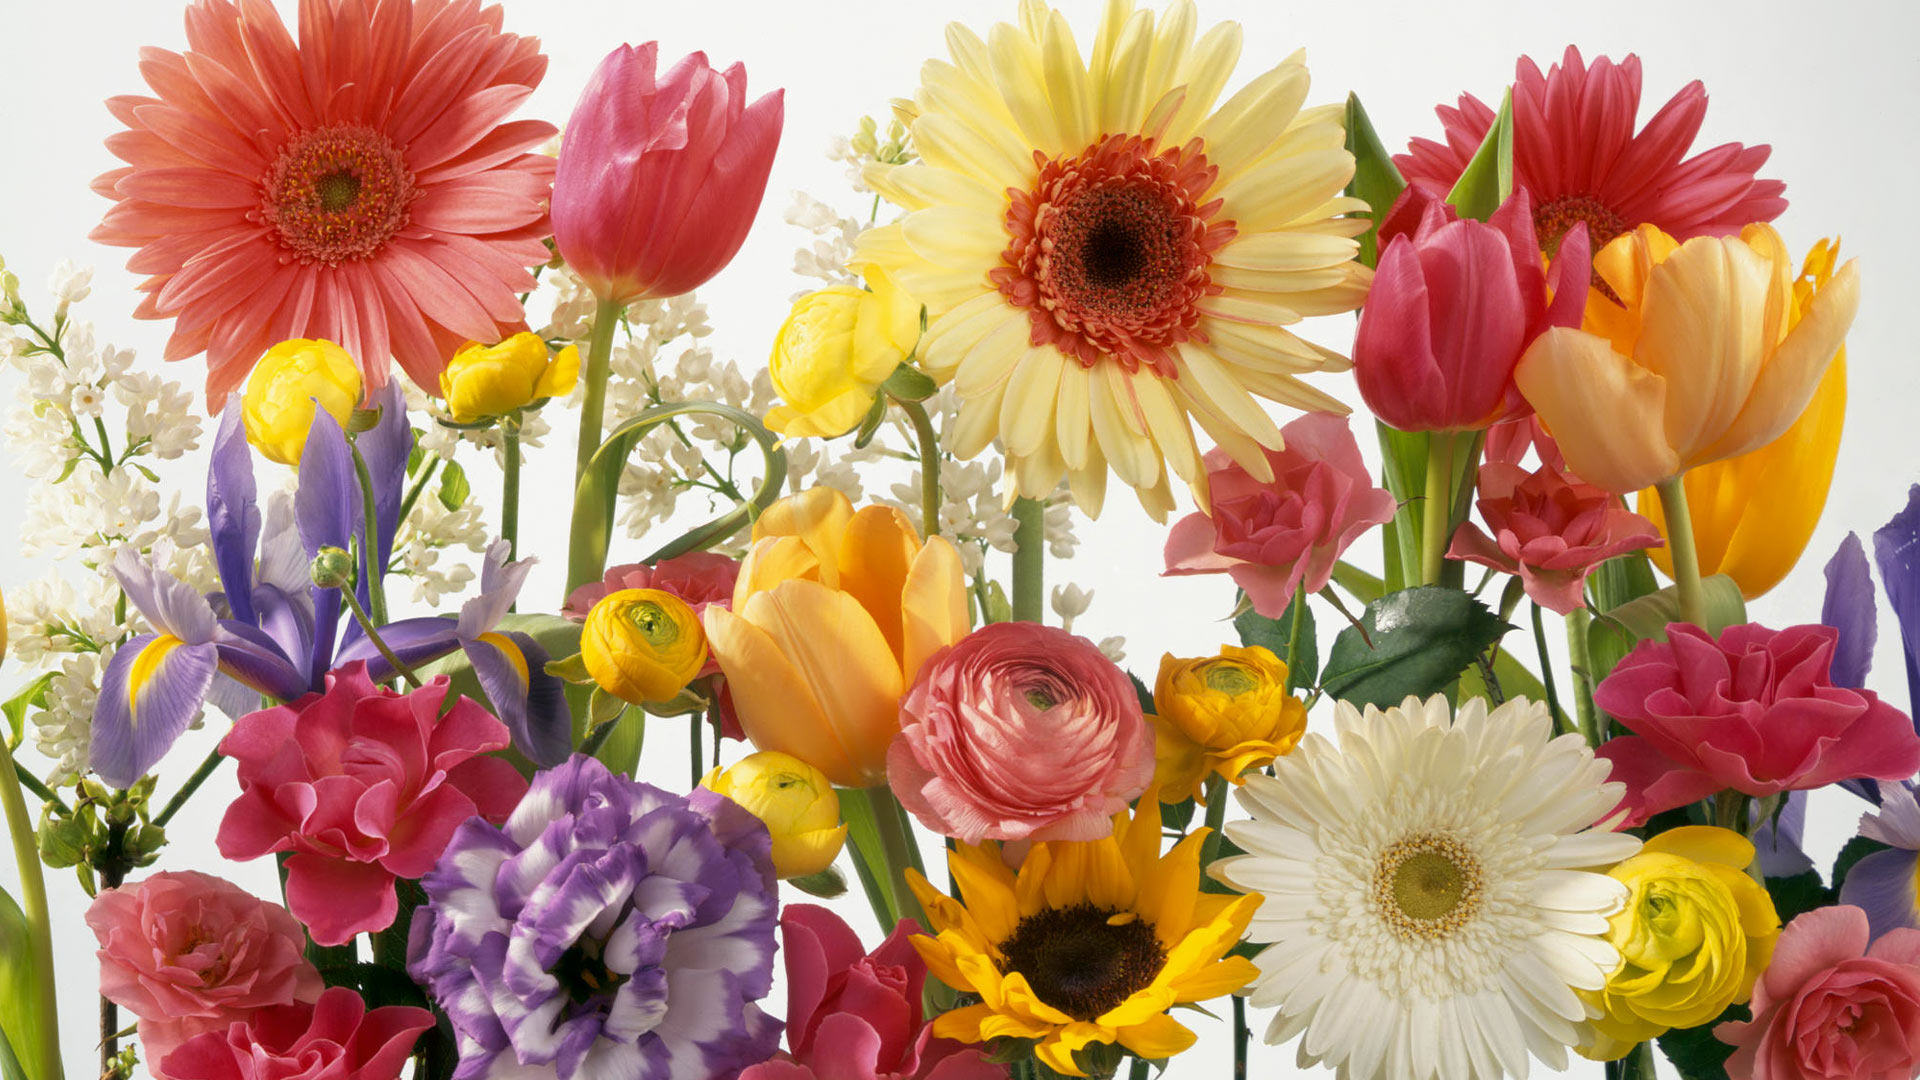 Desktop Wallpaper Spring Flowers